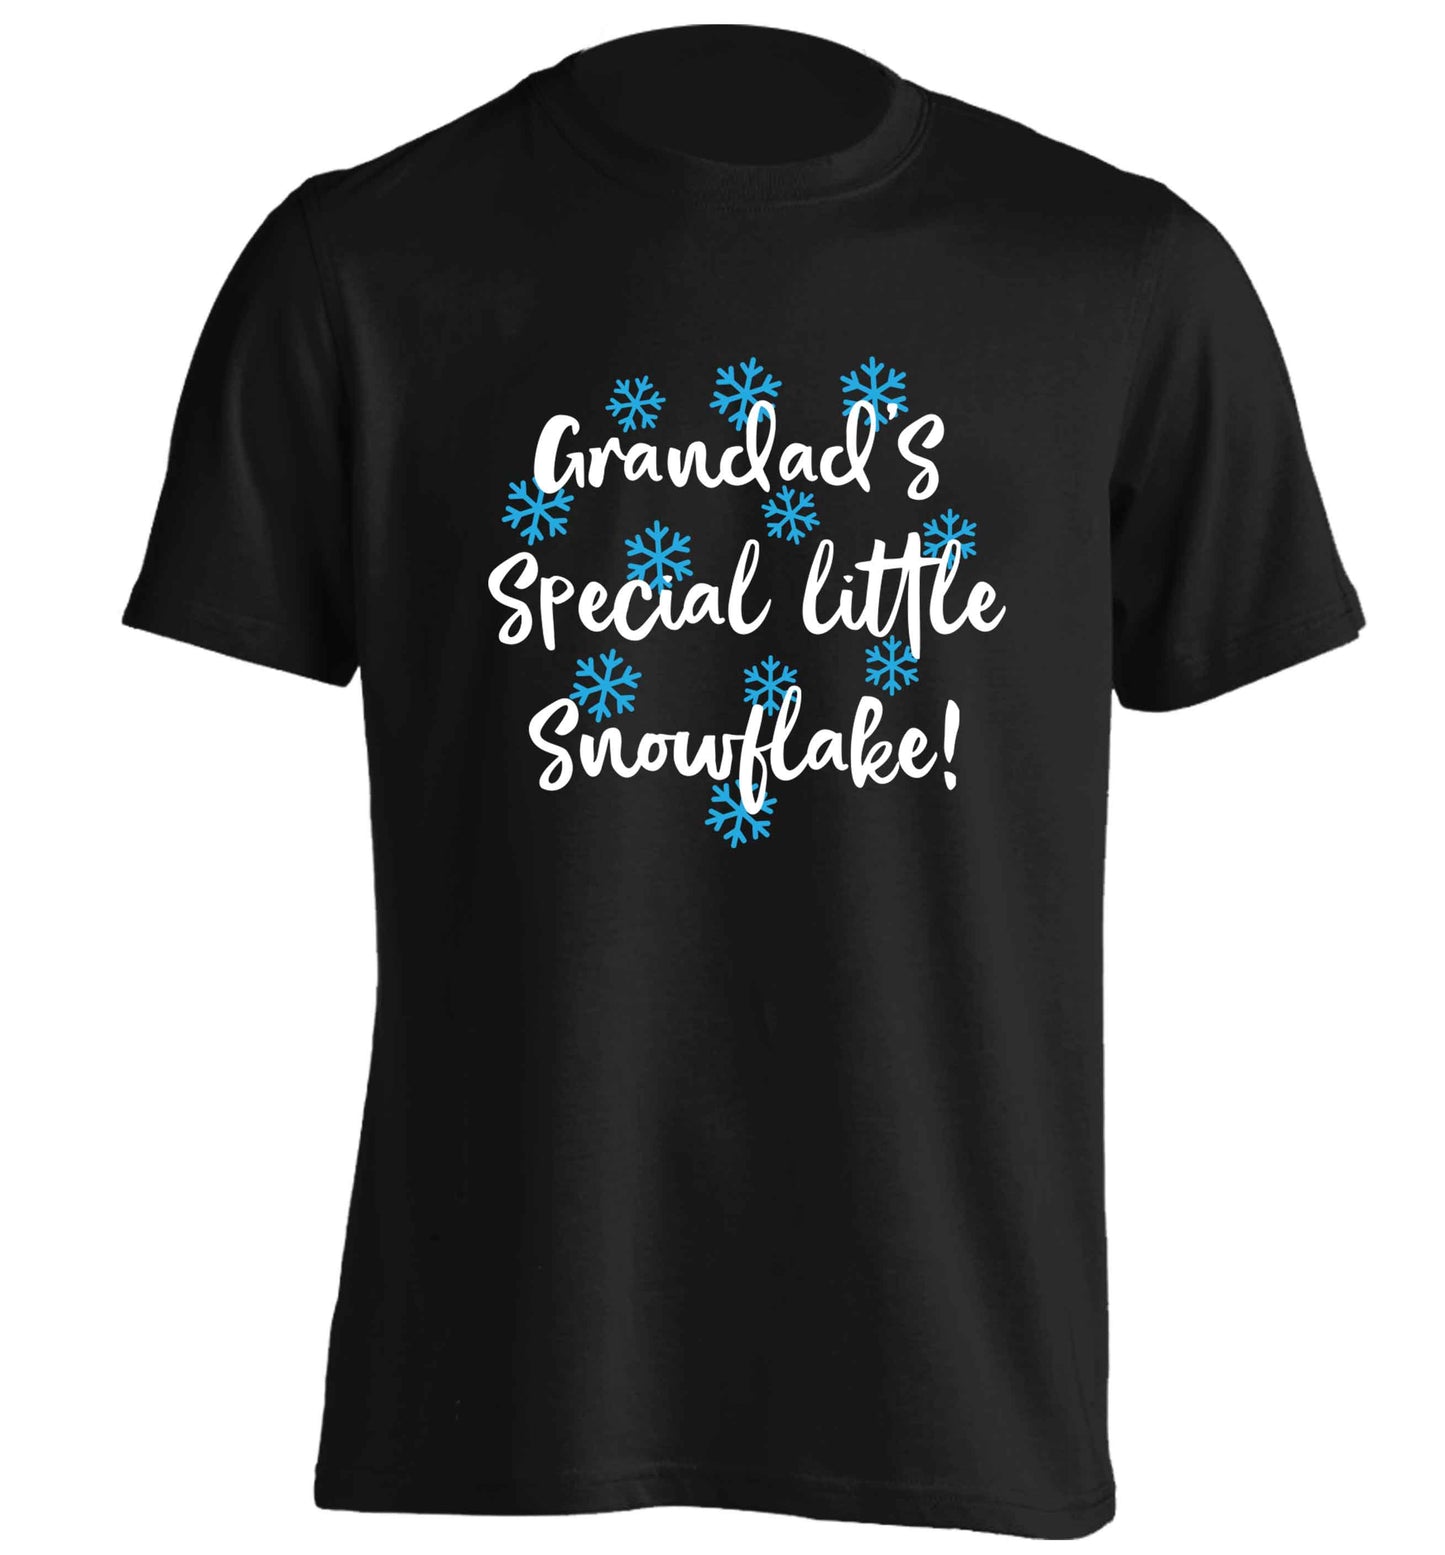 Grandad's special little snowflake adults unisex black Tshirt 2XL